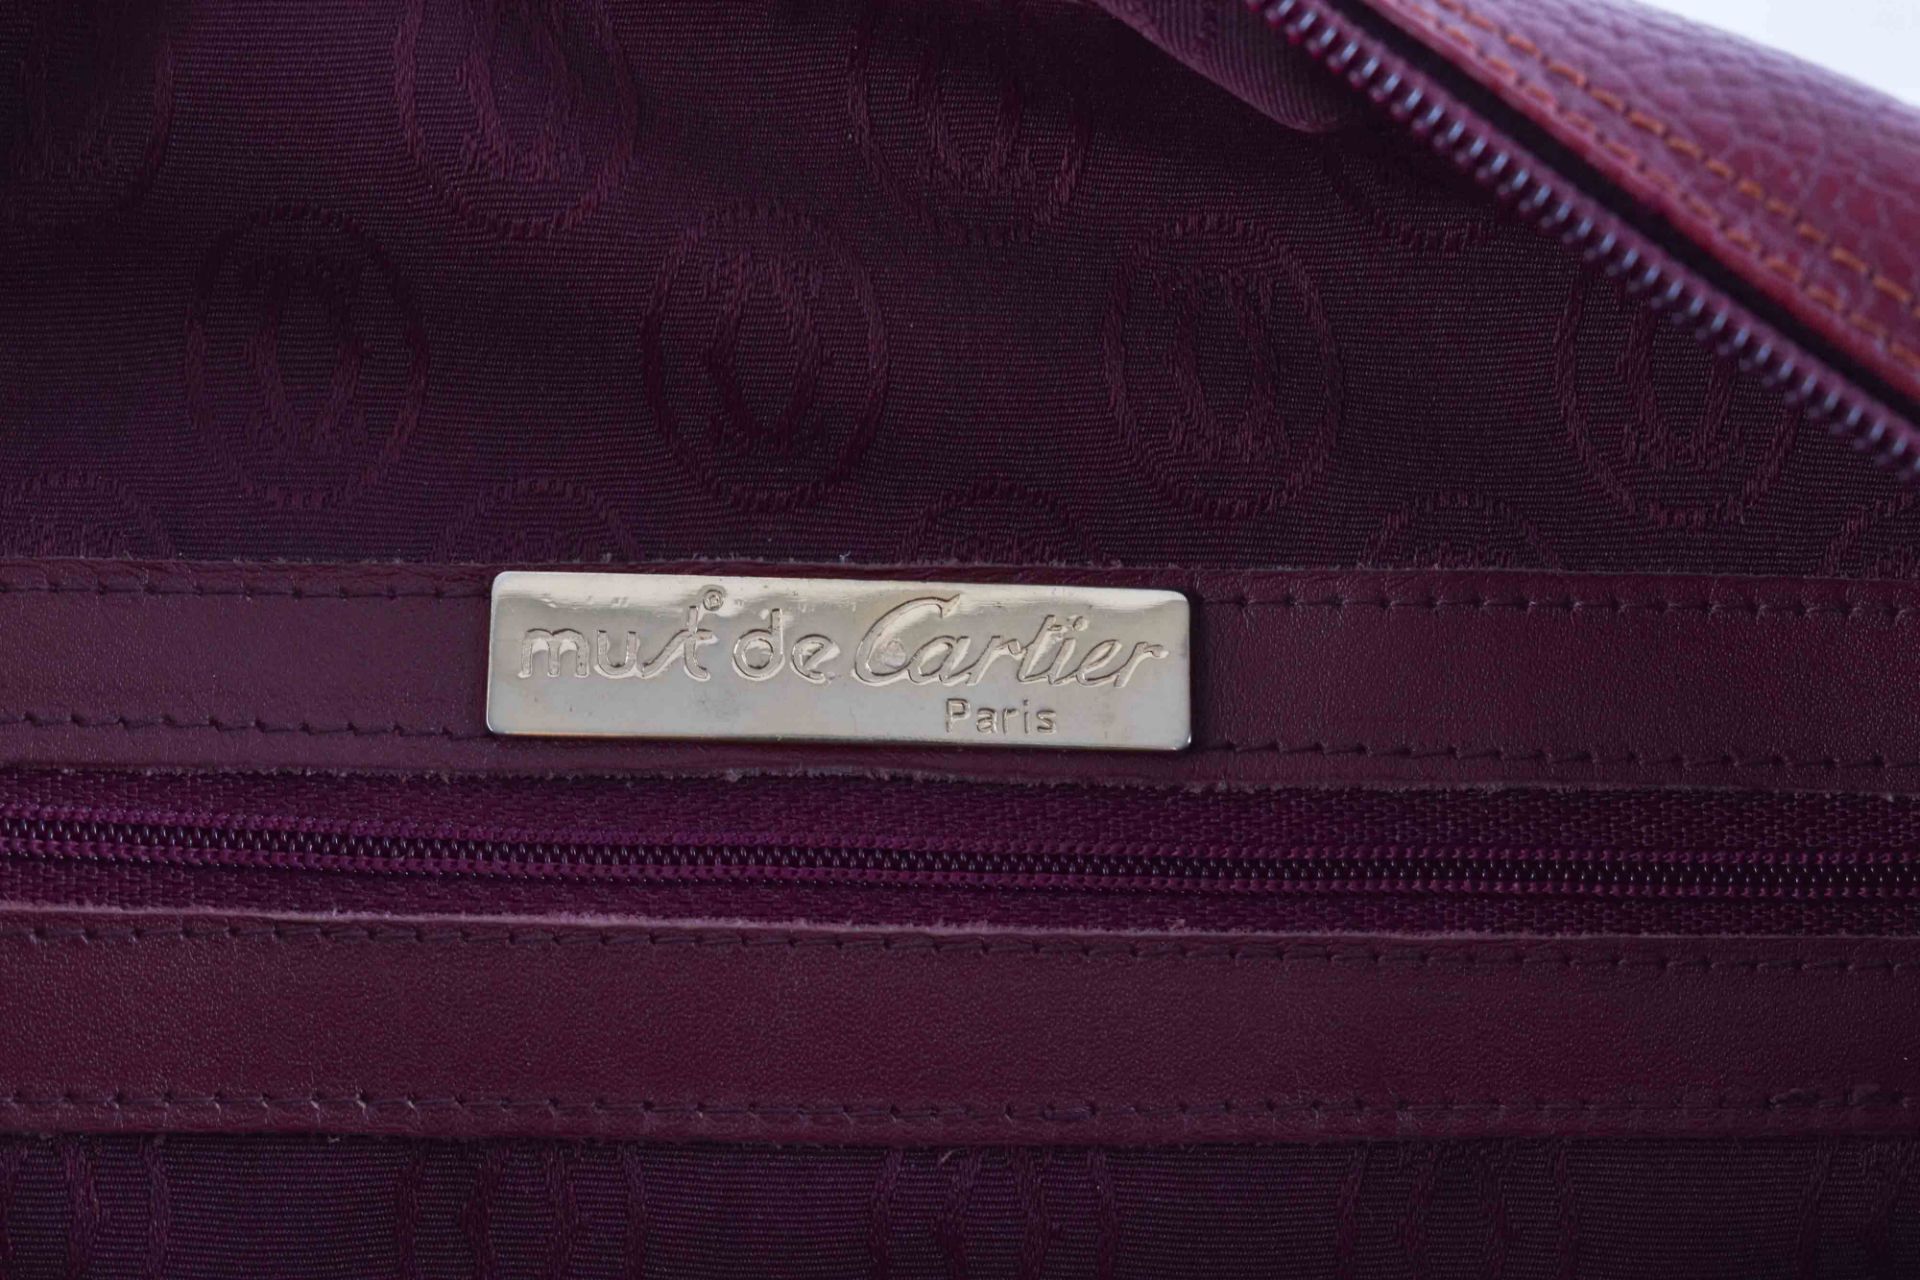 Handbag Must de Cartier - Bag - Image 5 of 5